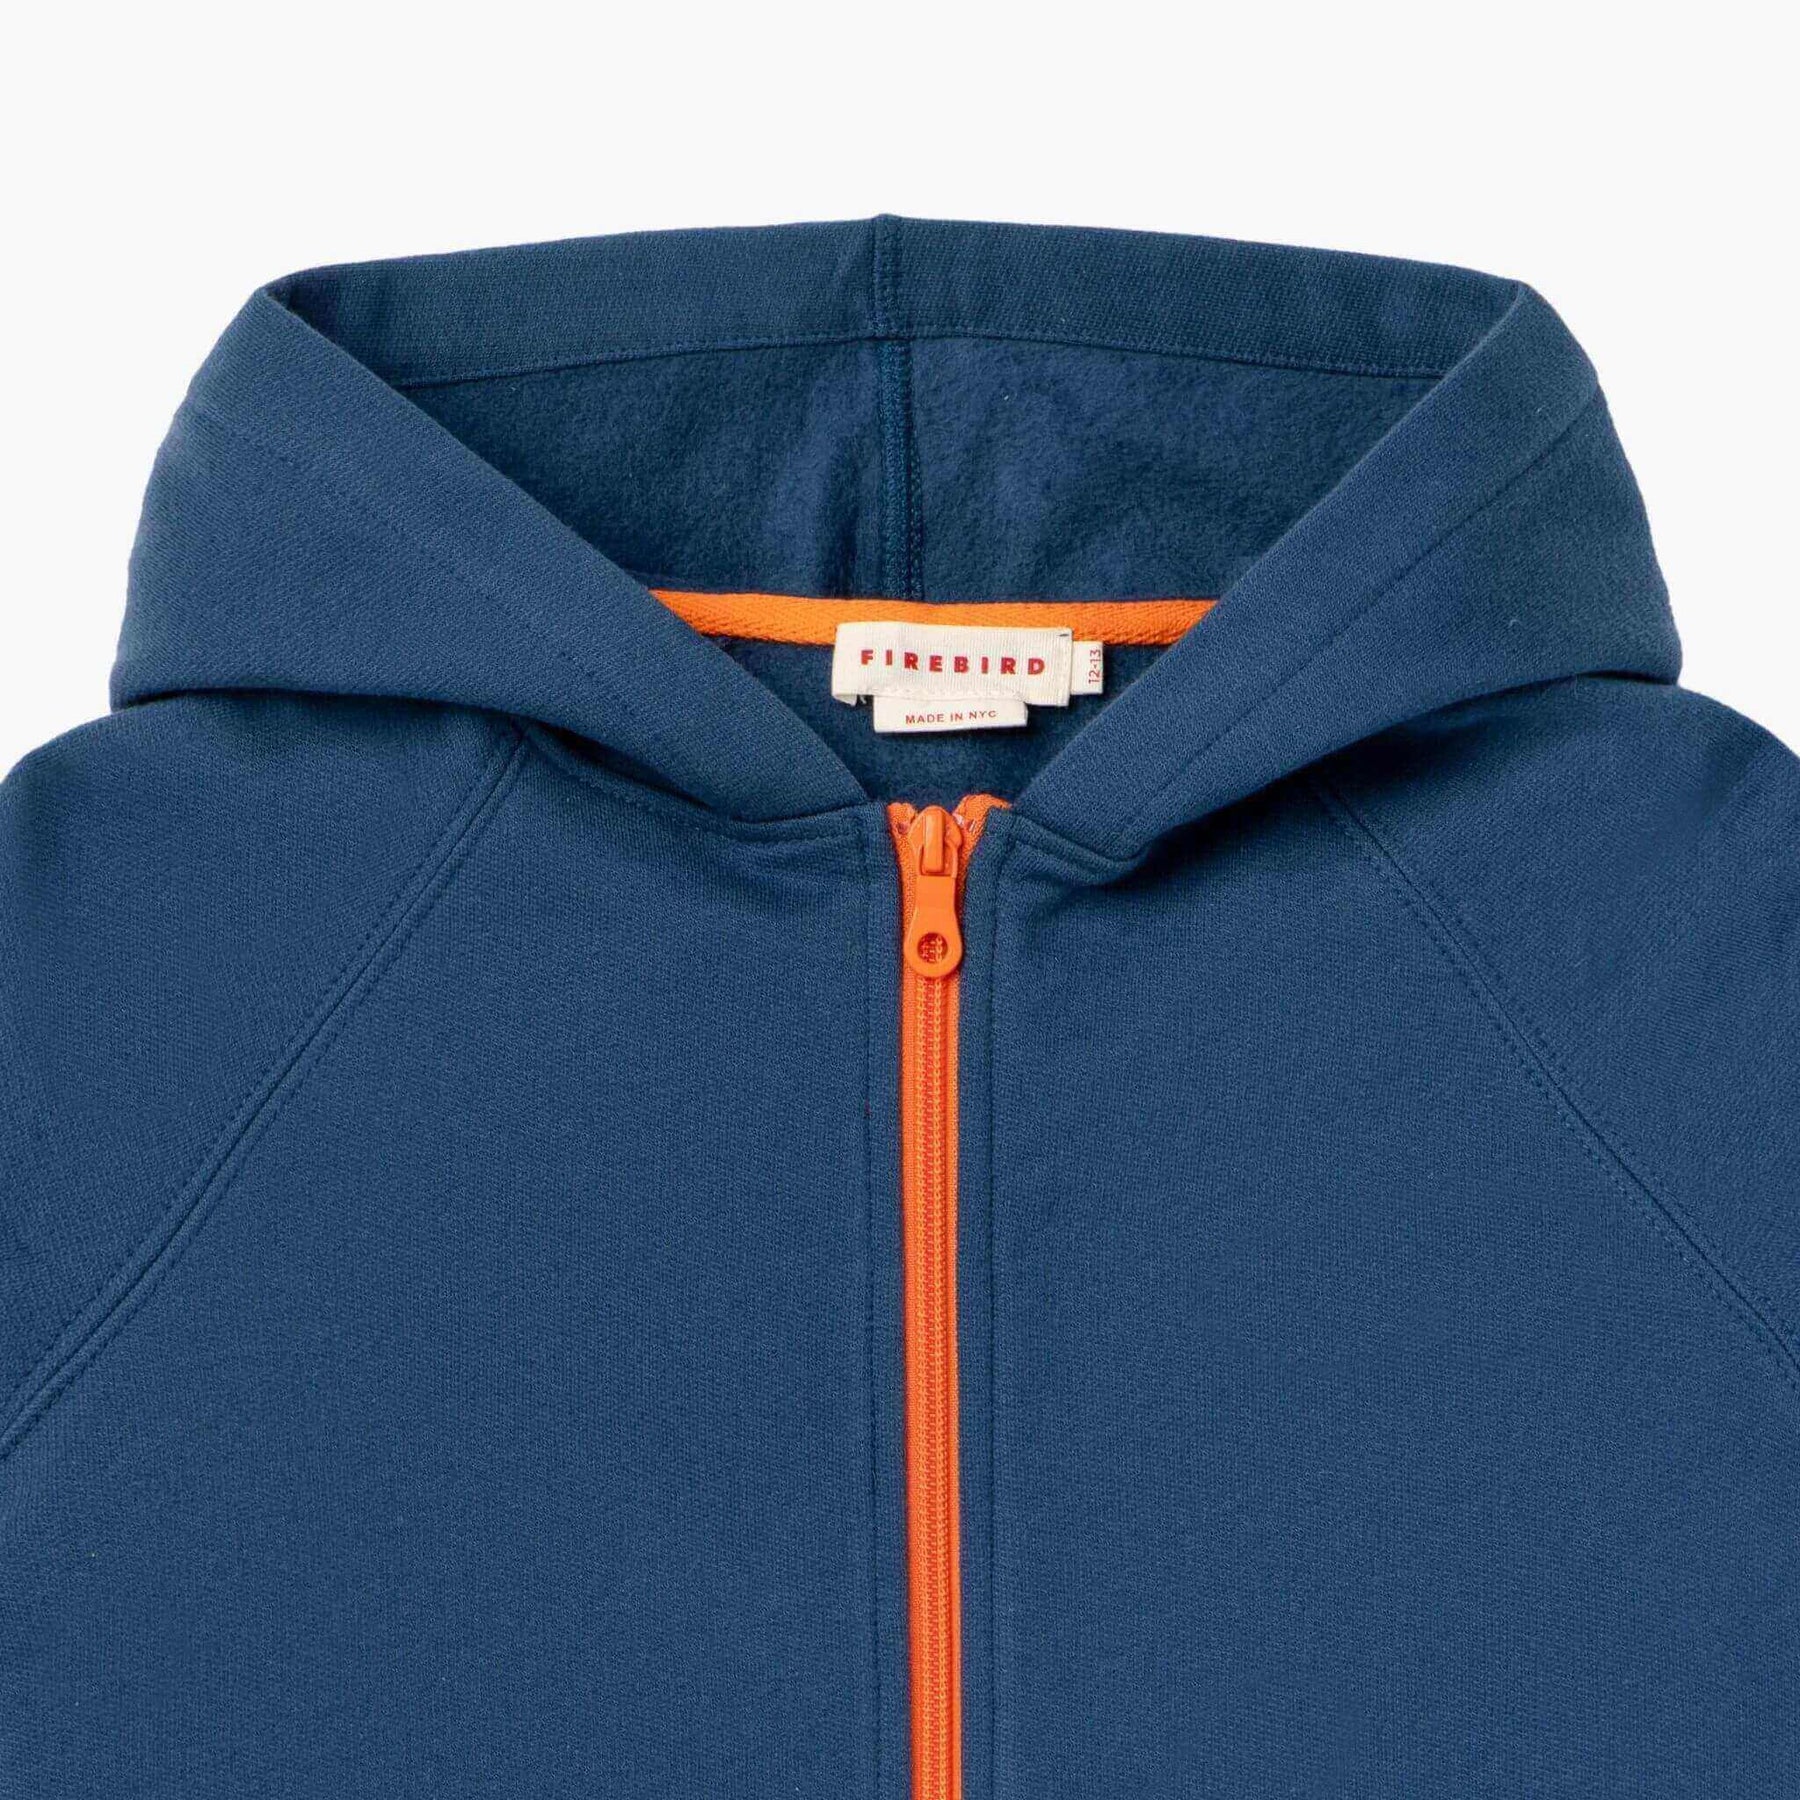 – Firebird Organic Sweater, Cotton. Italian 100% Marled from made